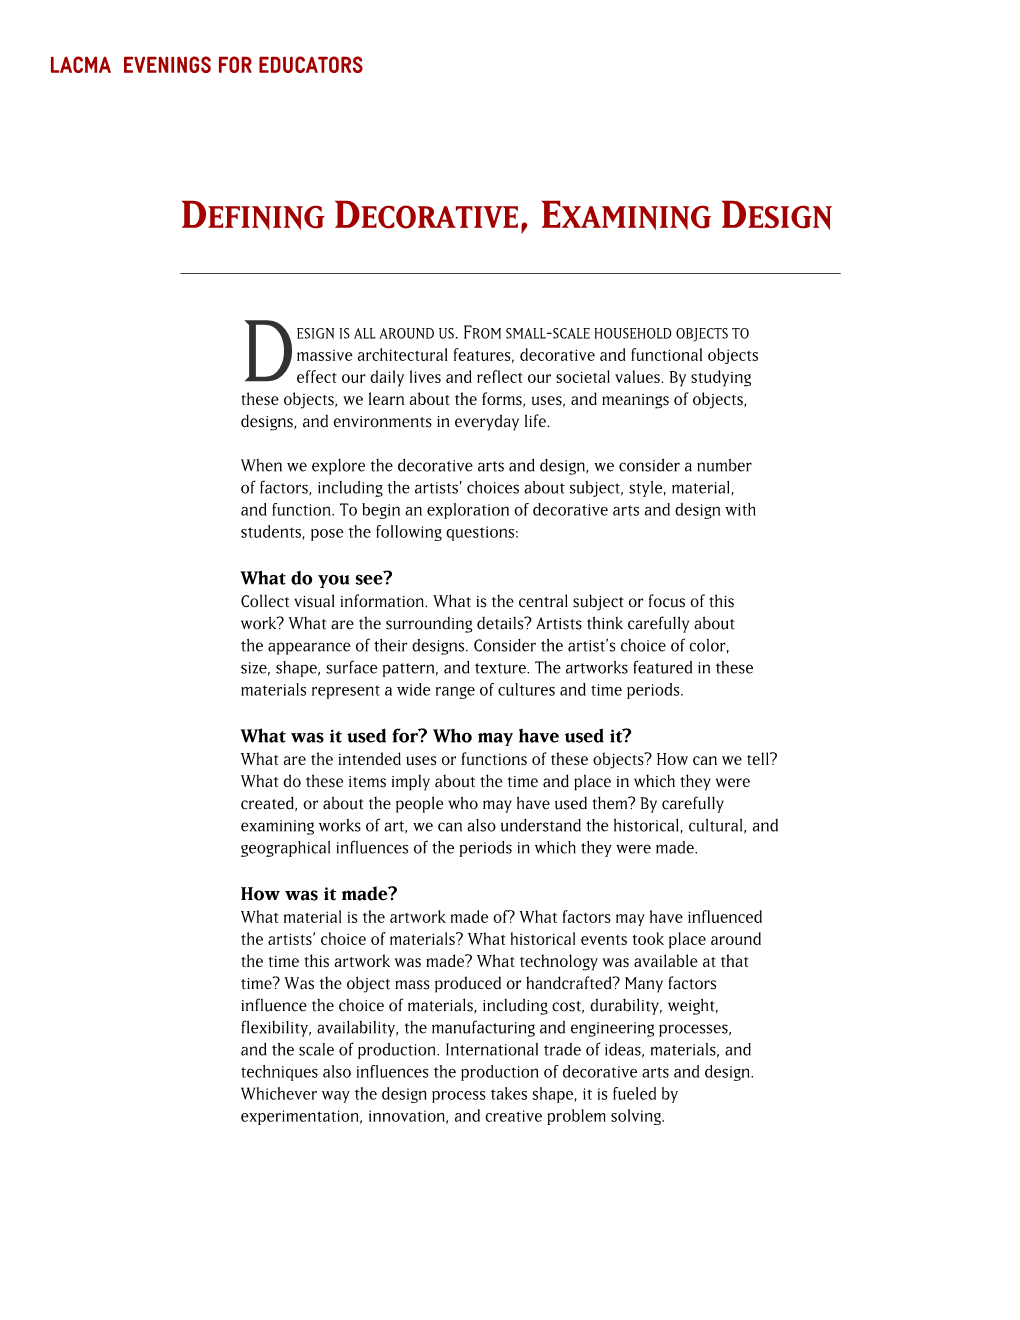 Defining Decorateive, Examining Design Discussion Questions